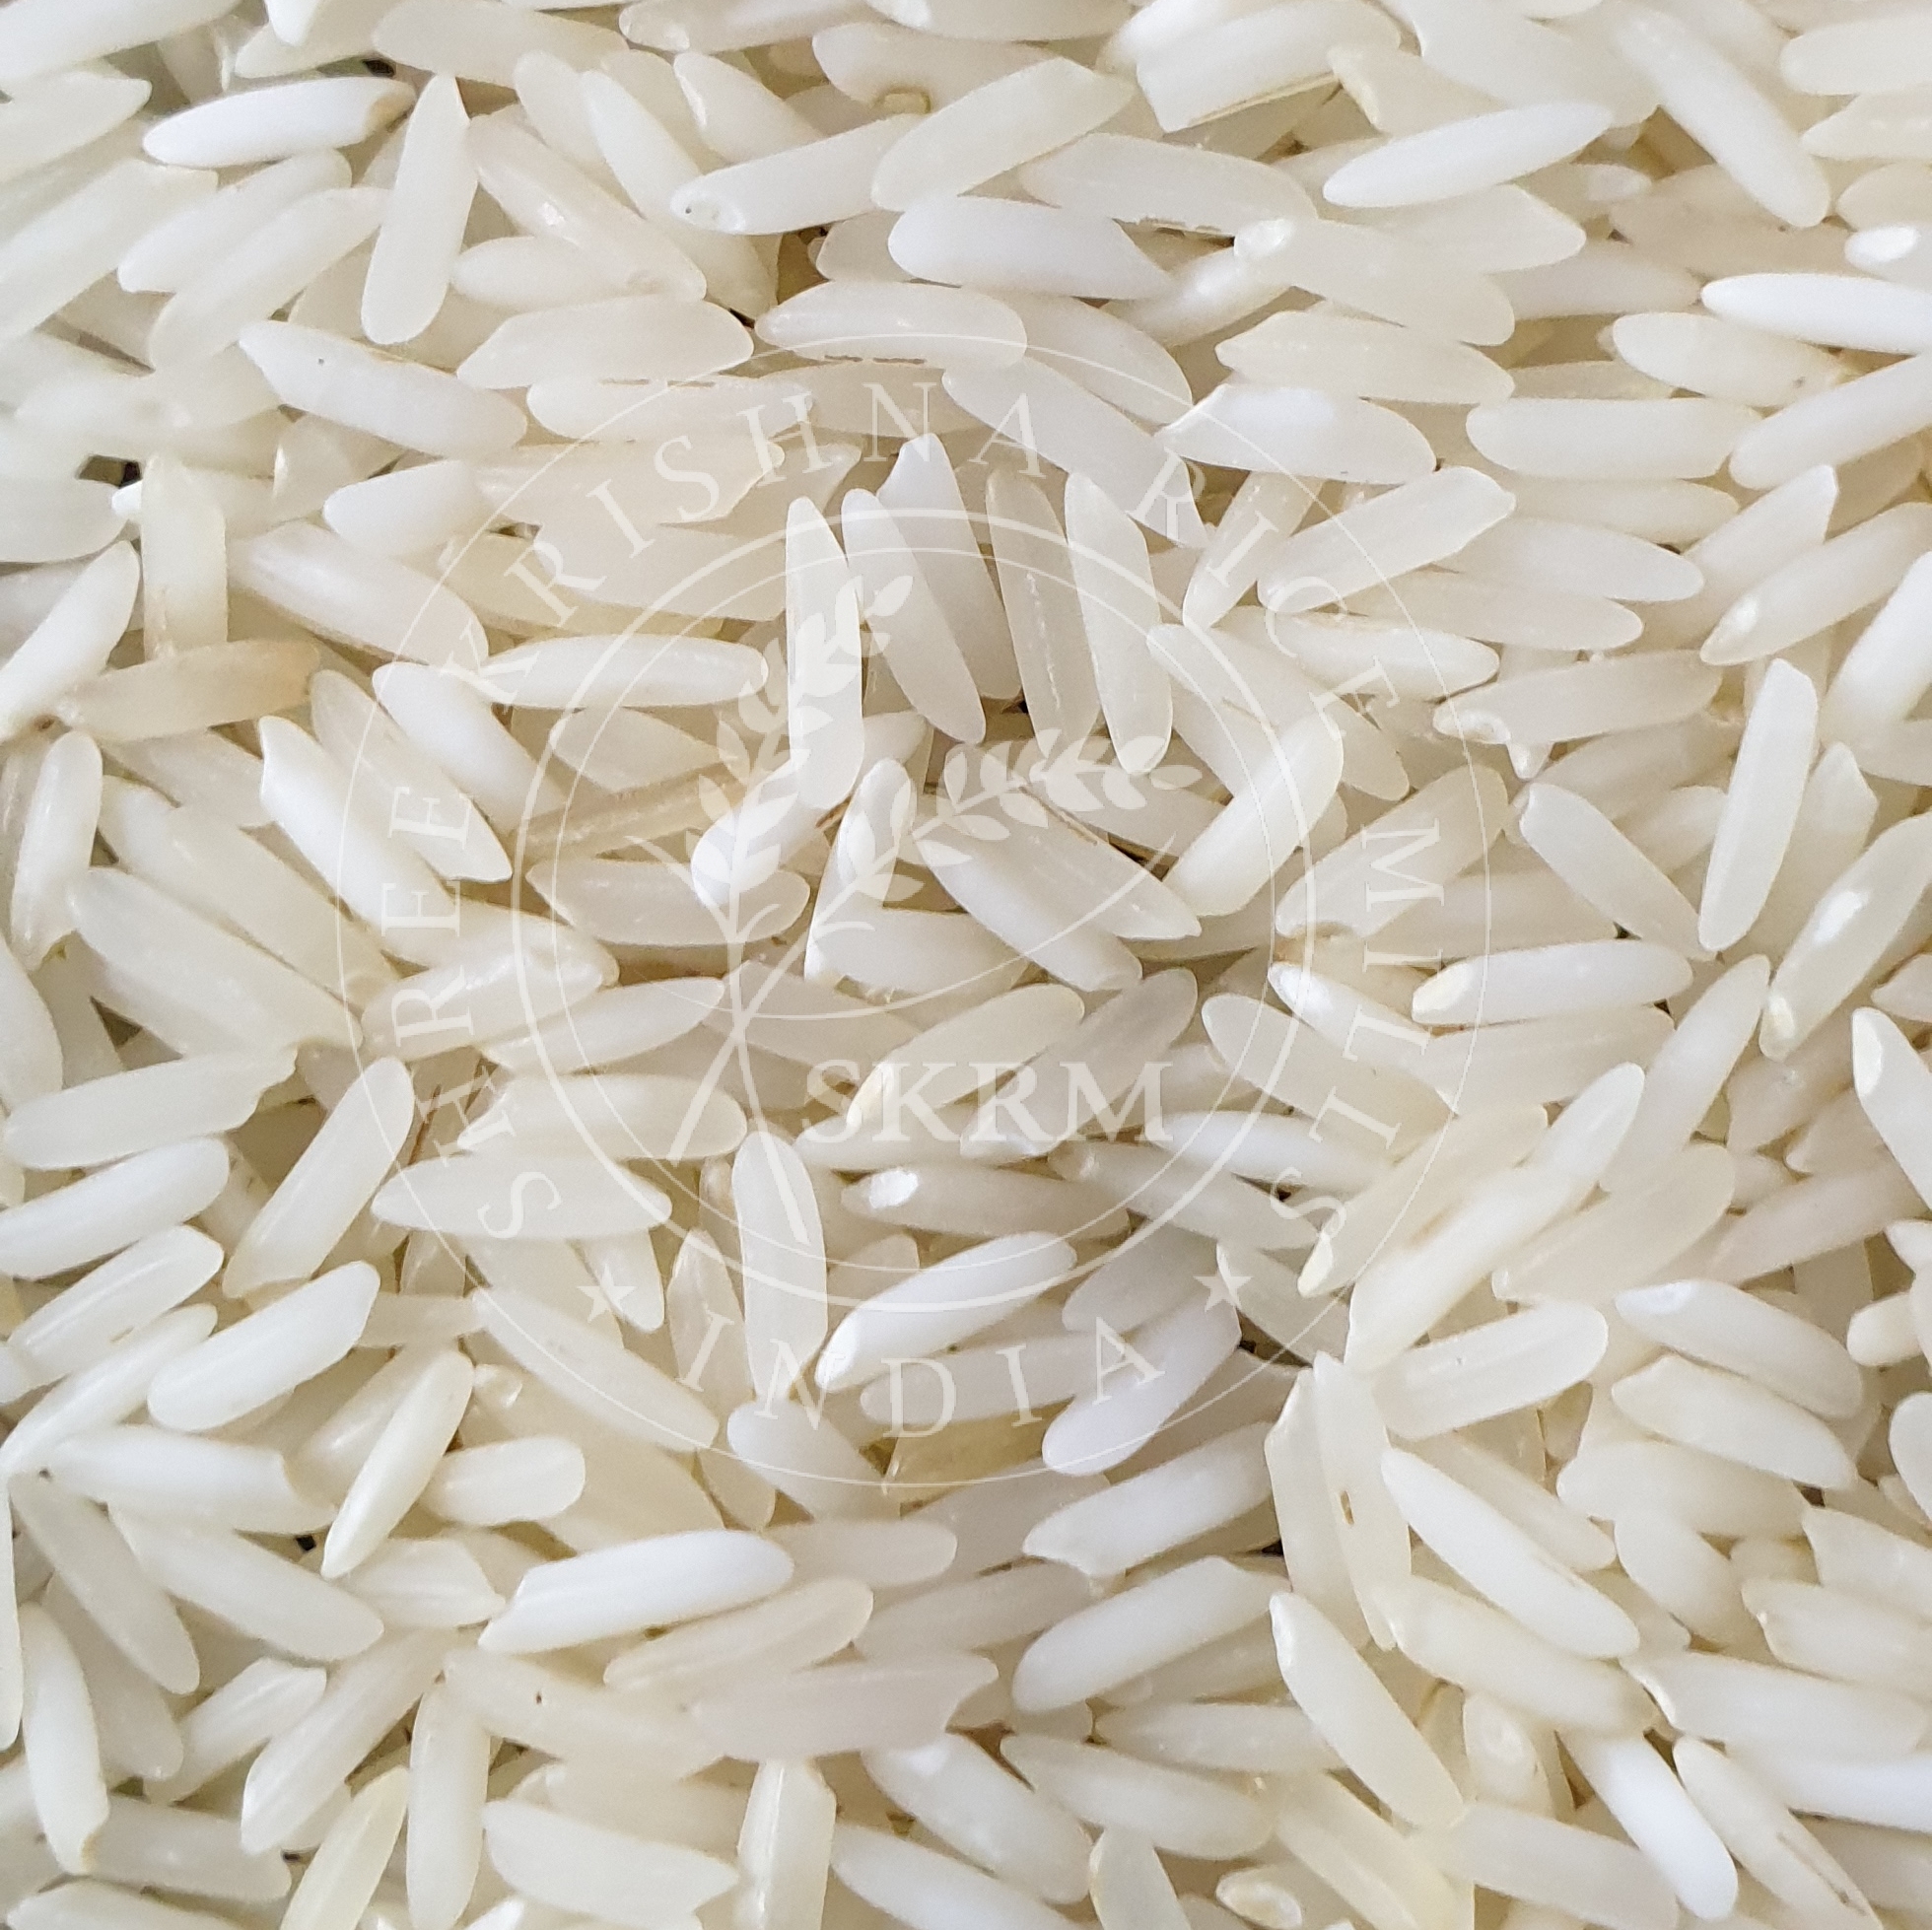 PR14 Raw Non Basmati Rice